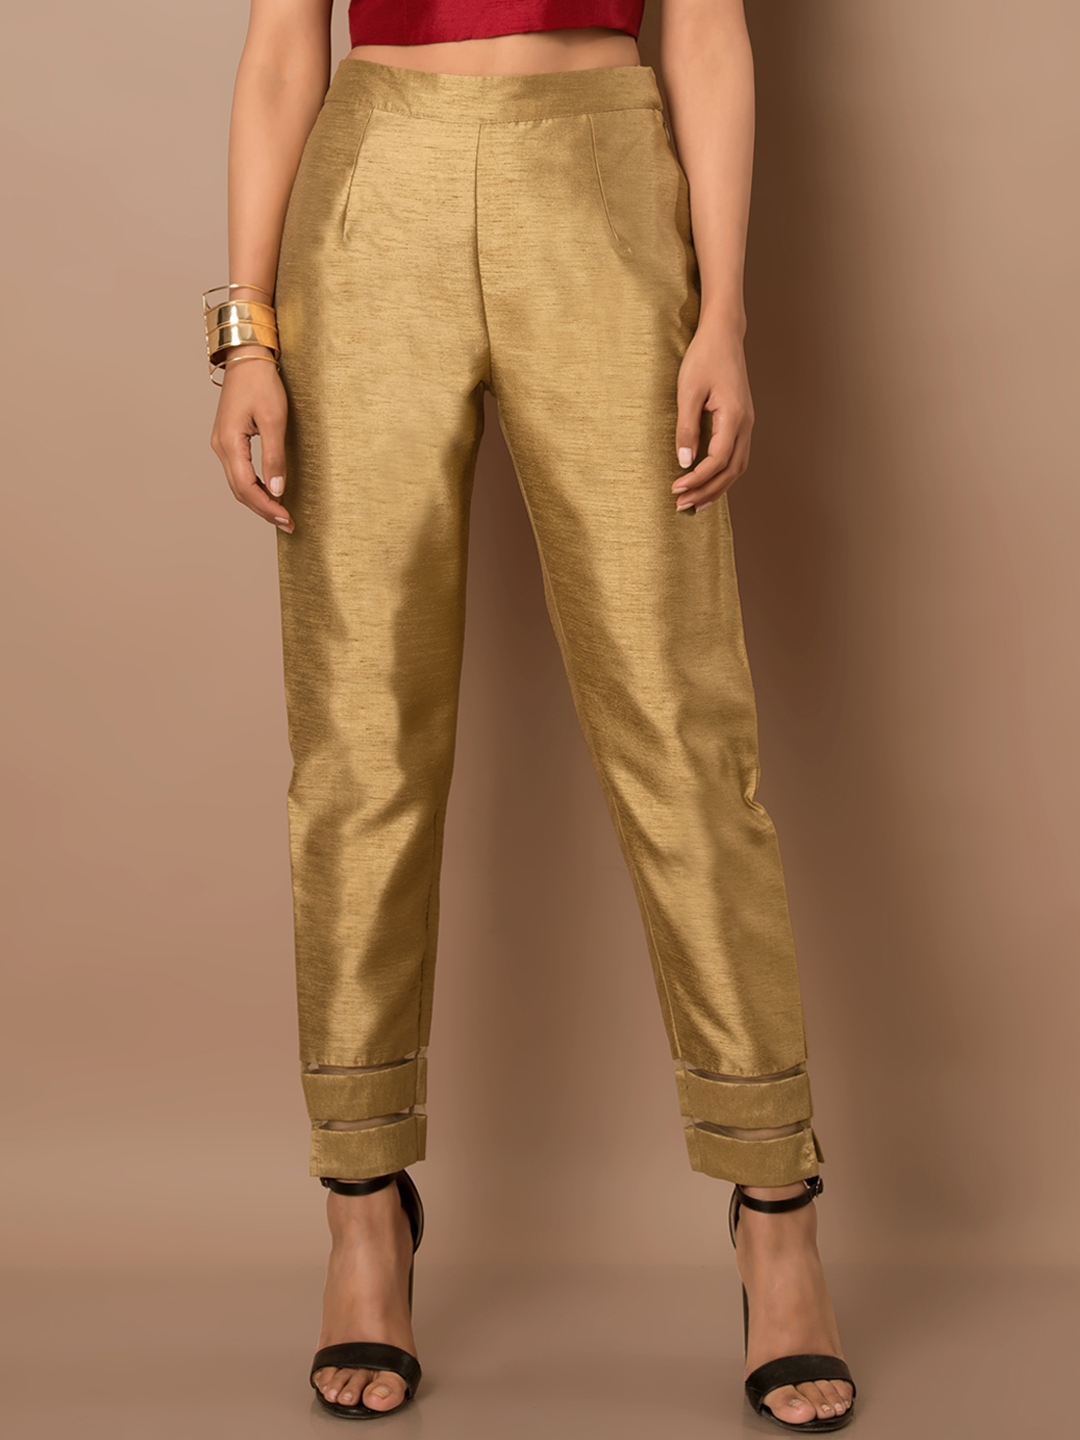 Buy DAMEN MODE Womens Regular Fit Plain Golden Cotton Silk Pants 30 at  Amazonin